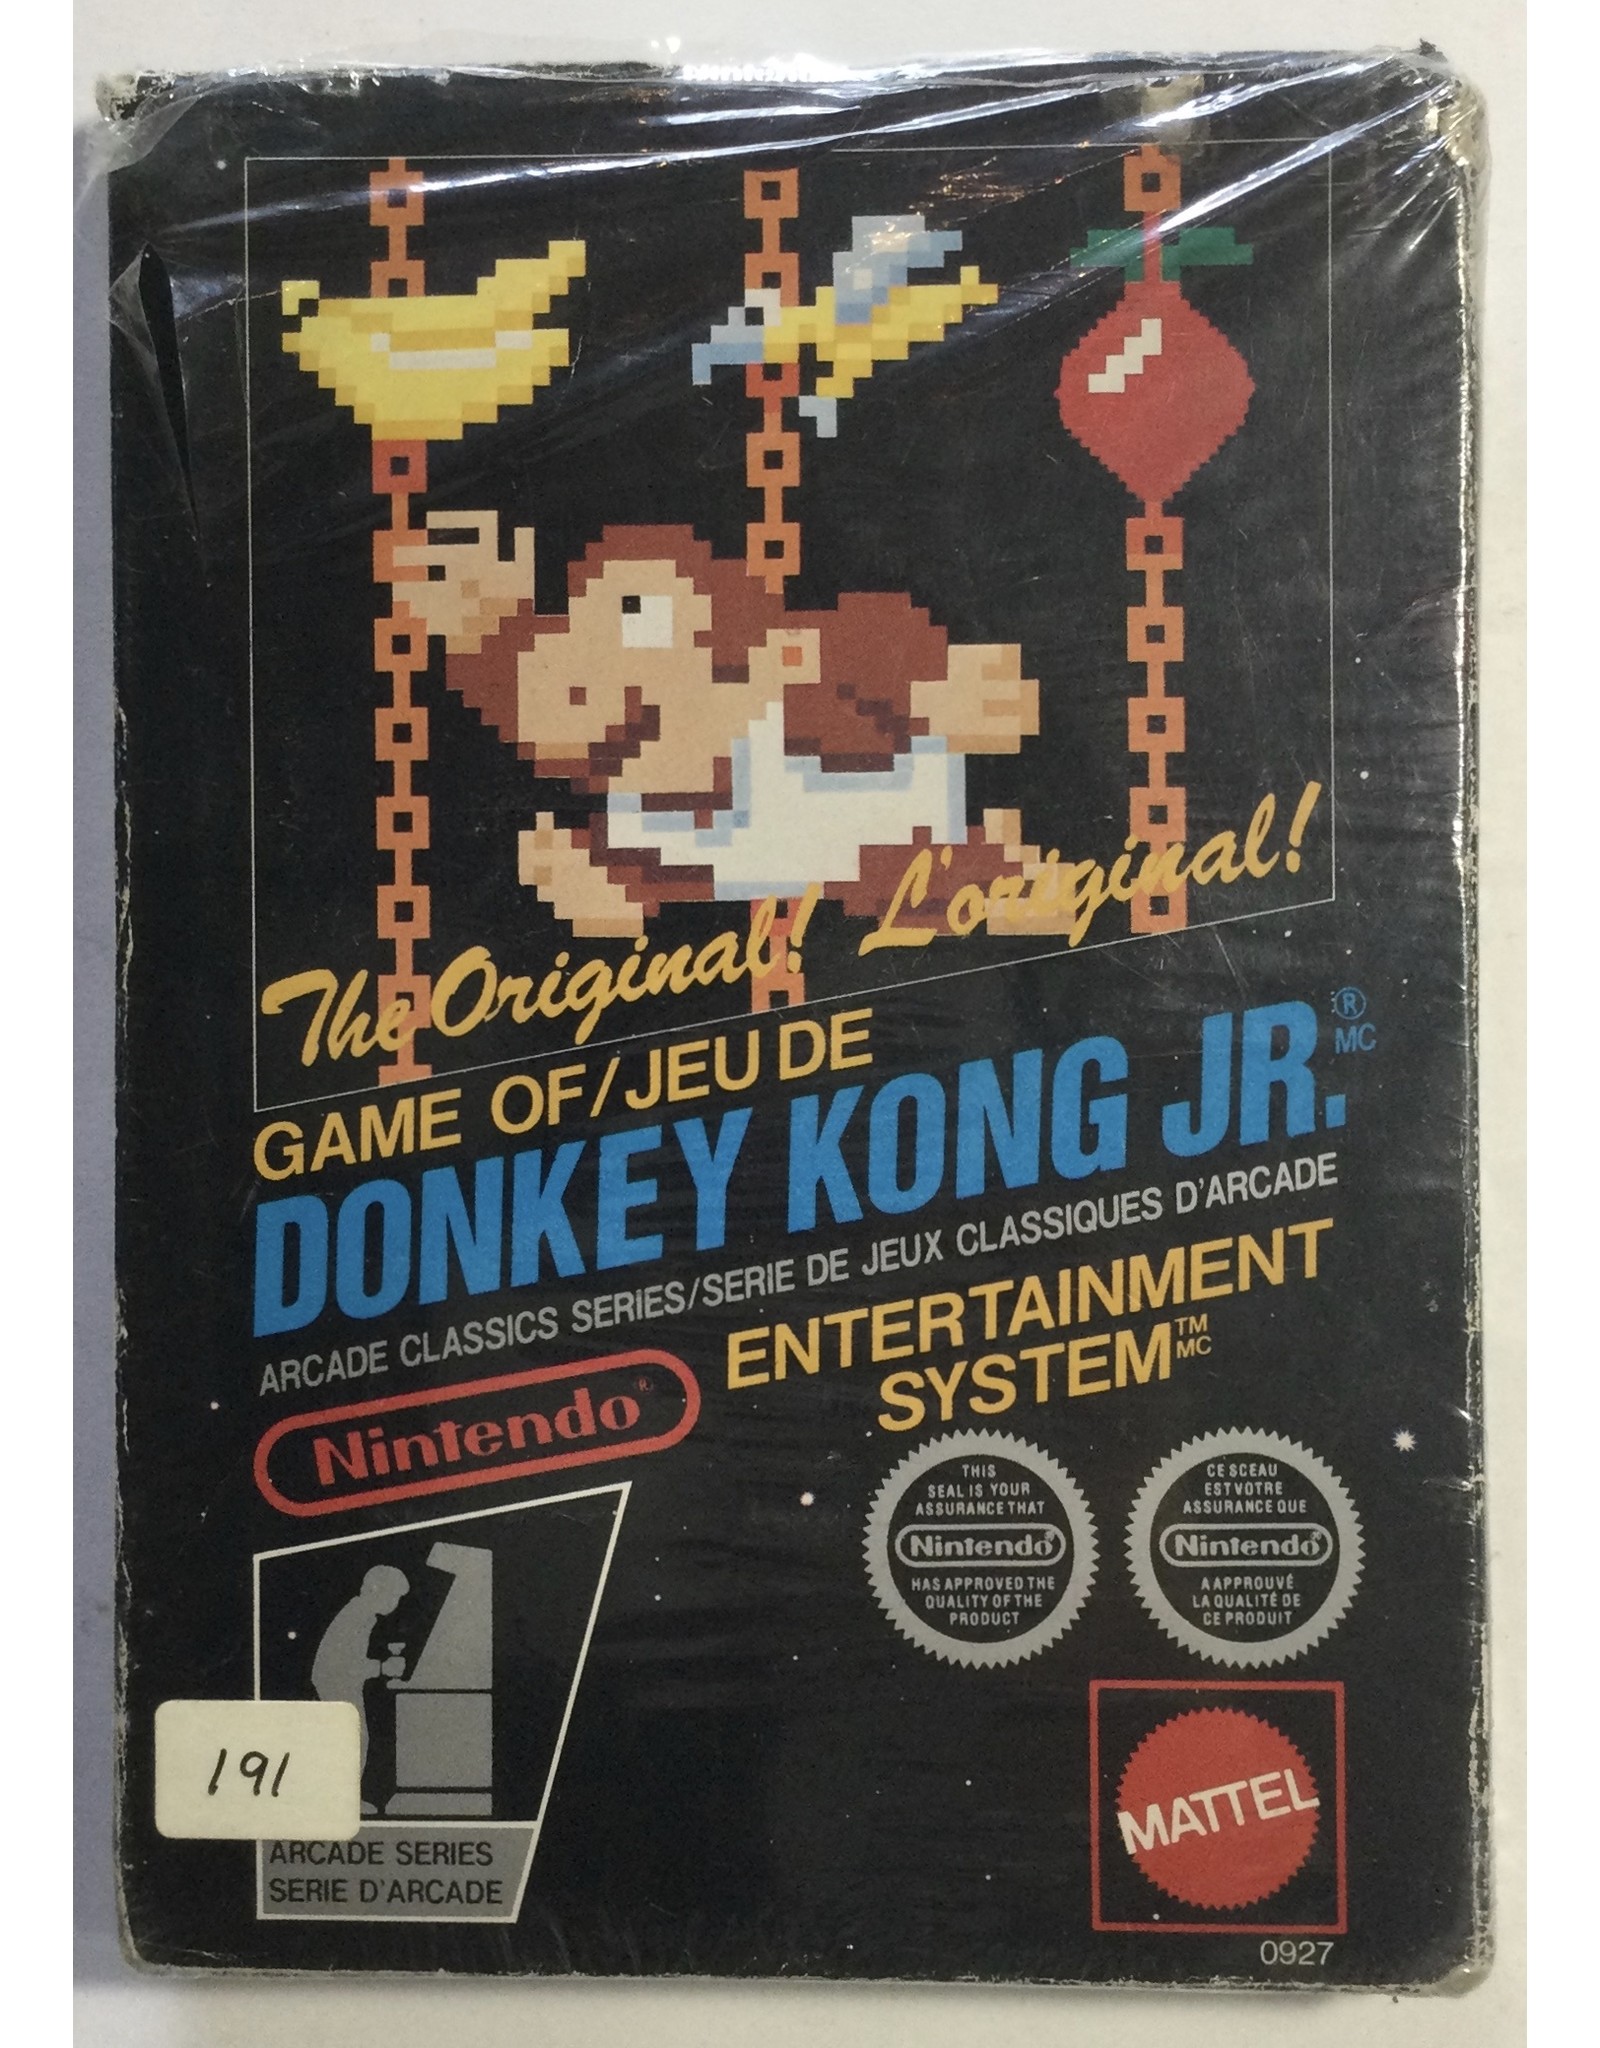 Mattel The Original Game of Donkey Kong Jr. for Nintendo Entertainment System (NES)